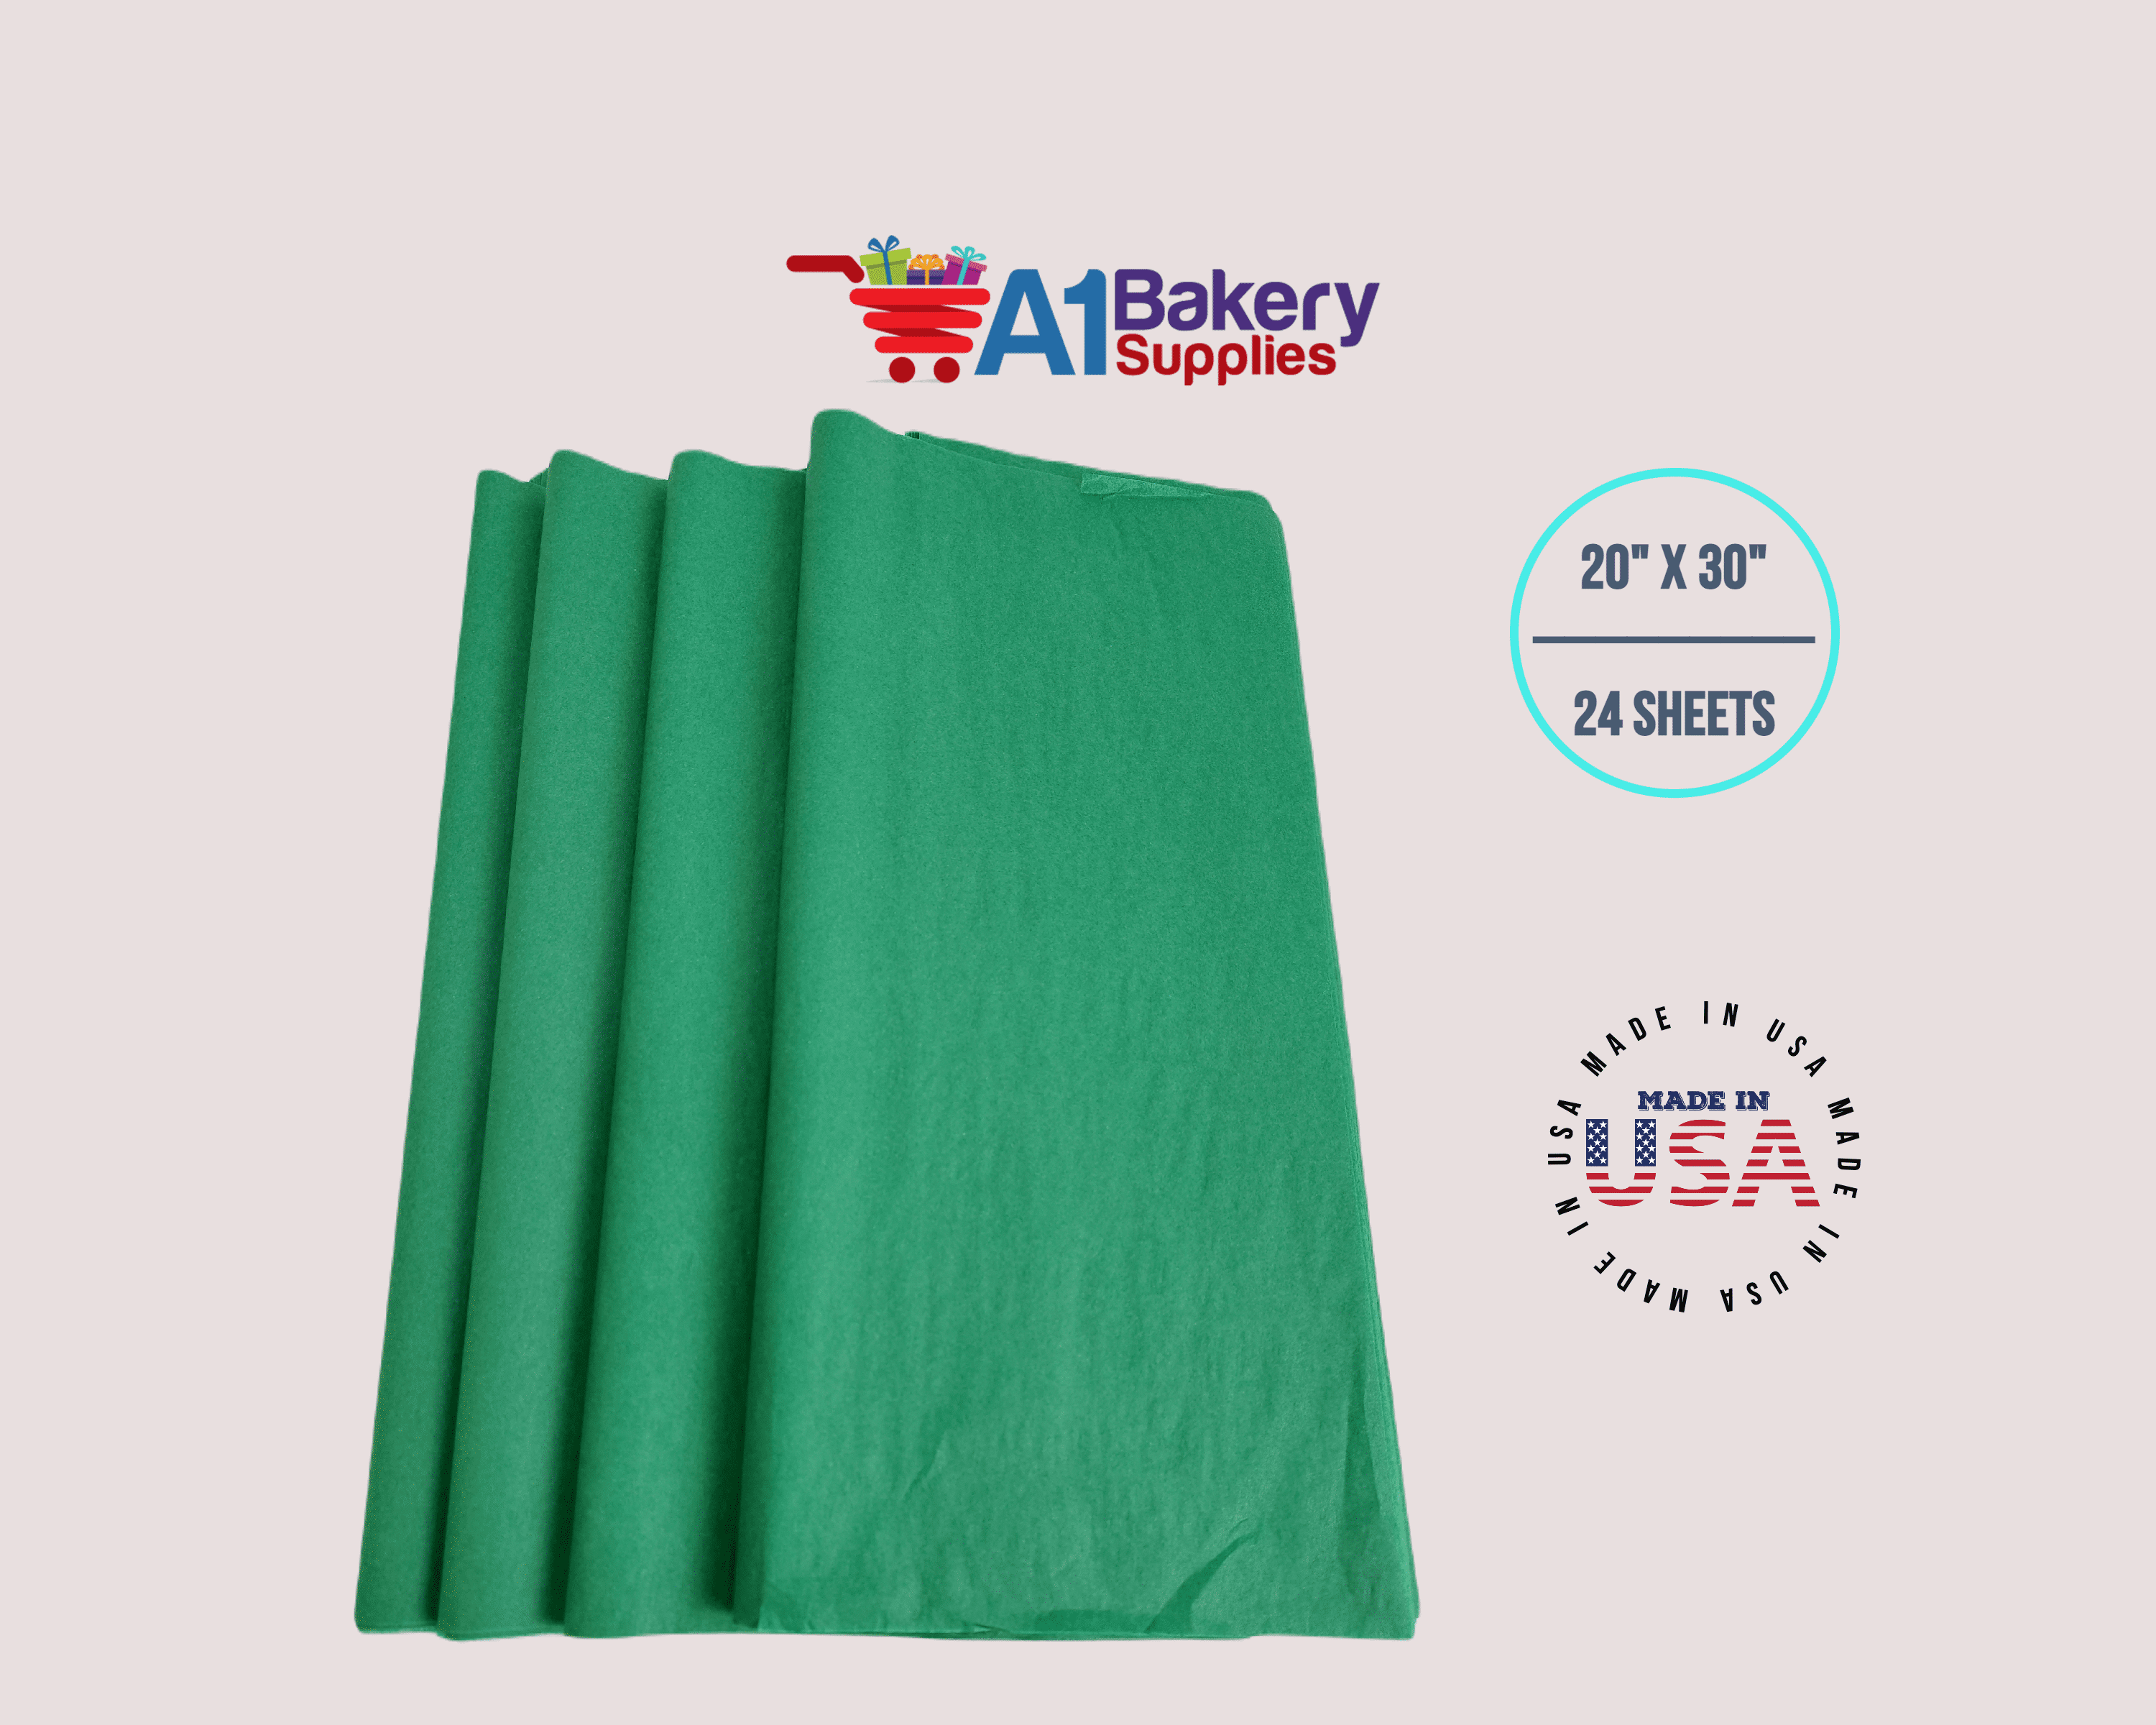 Hi Sasara 100 Sheets White with Green Dot Tissue Paper,14 x 20 inch,Green  Polka Dot Tissue Paper for Gift Bags,Polka Dot Tissue for St. Patrick's